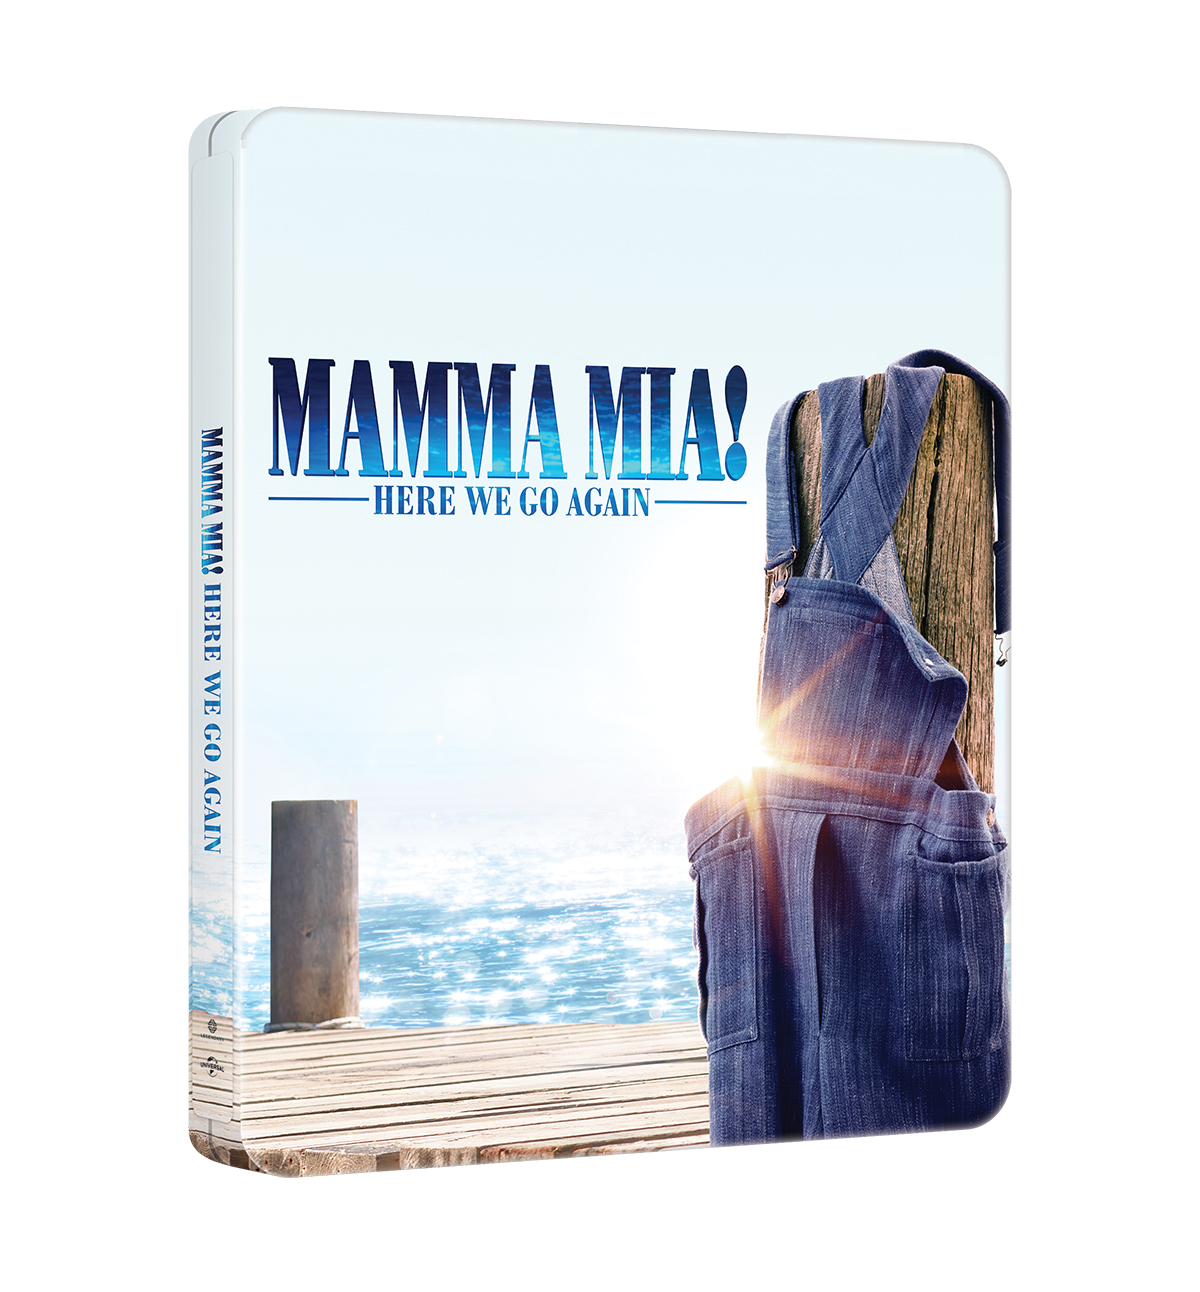 [Blu-ray] Mamma Mia! Here We Go Again (2Disc: 2D+ Bonus DVD) Steelbook Limited Edition